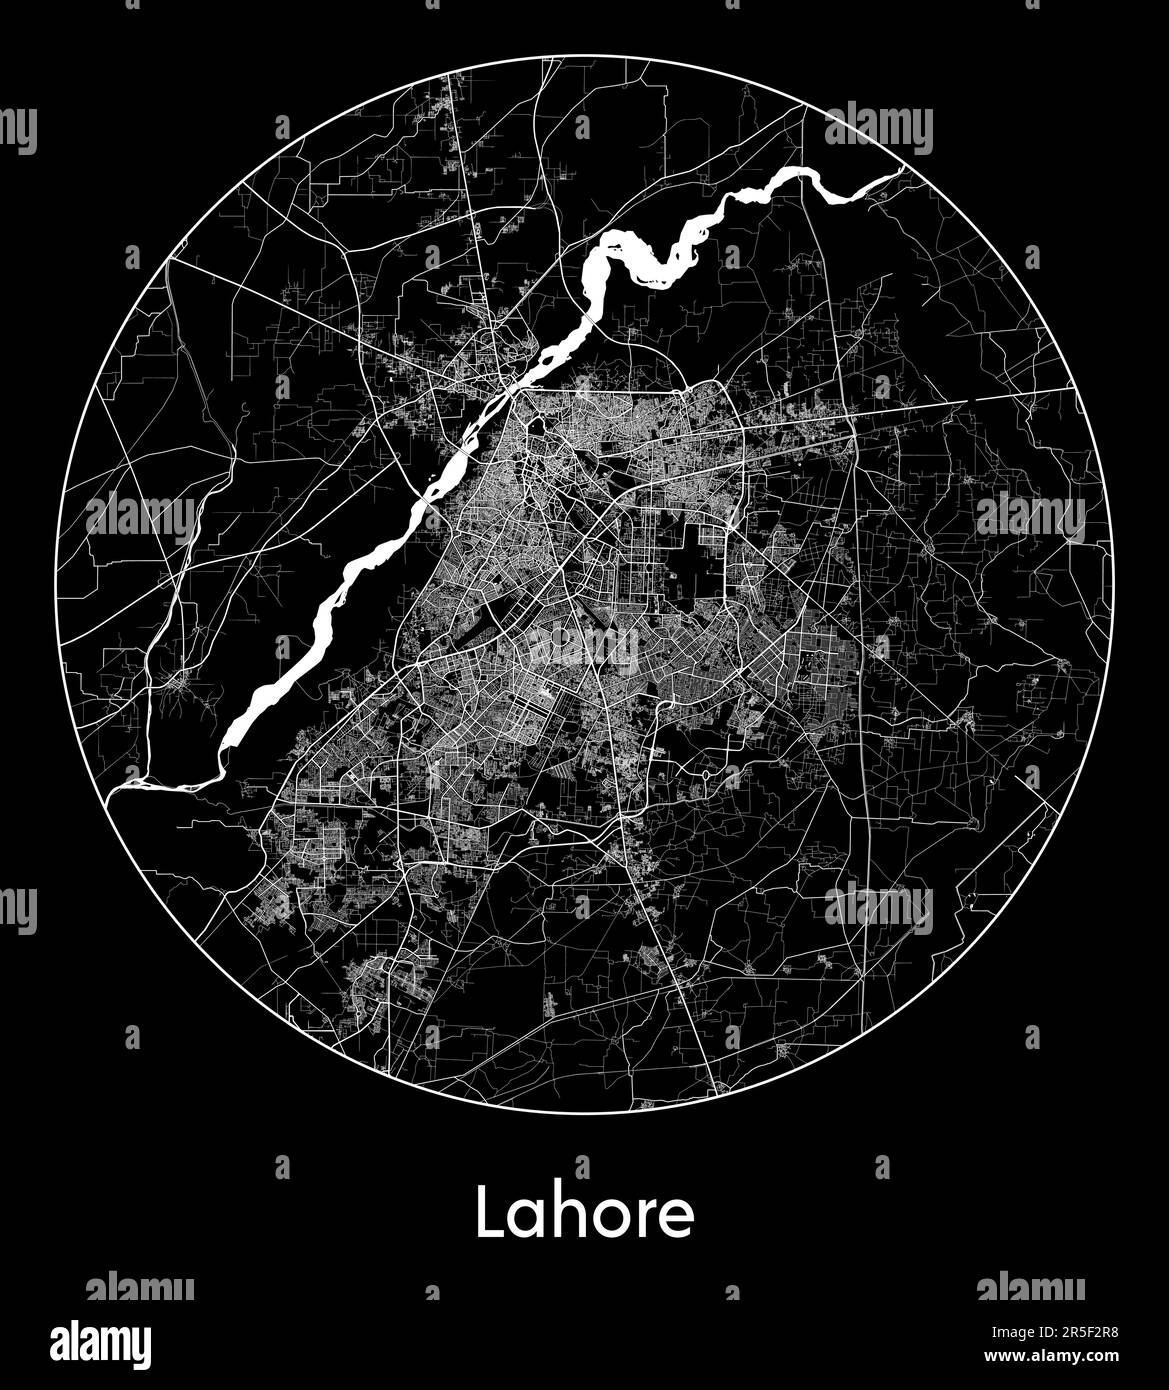 City Map Lahore Pakistan Asia vector illustration Stock Vector